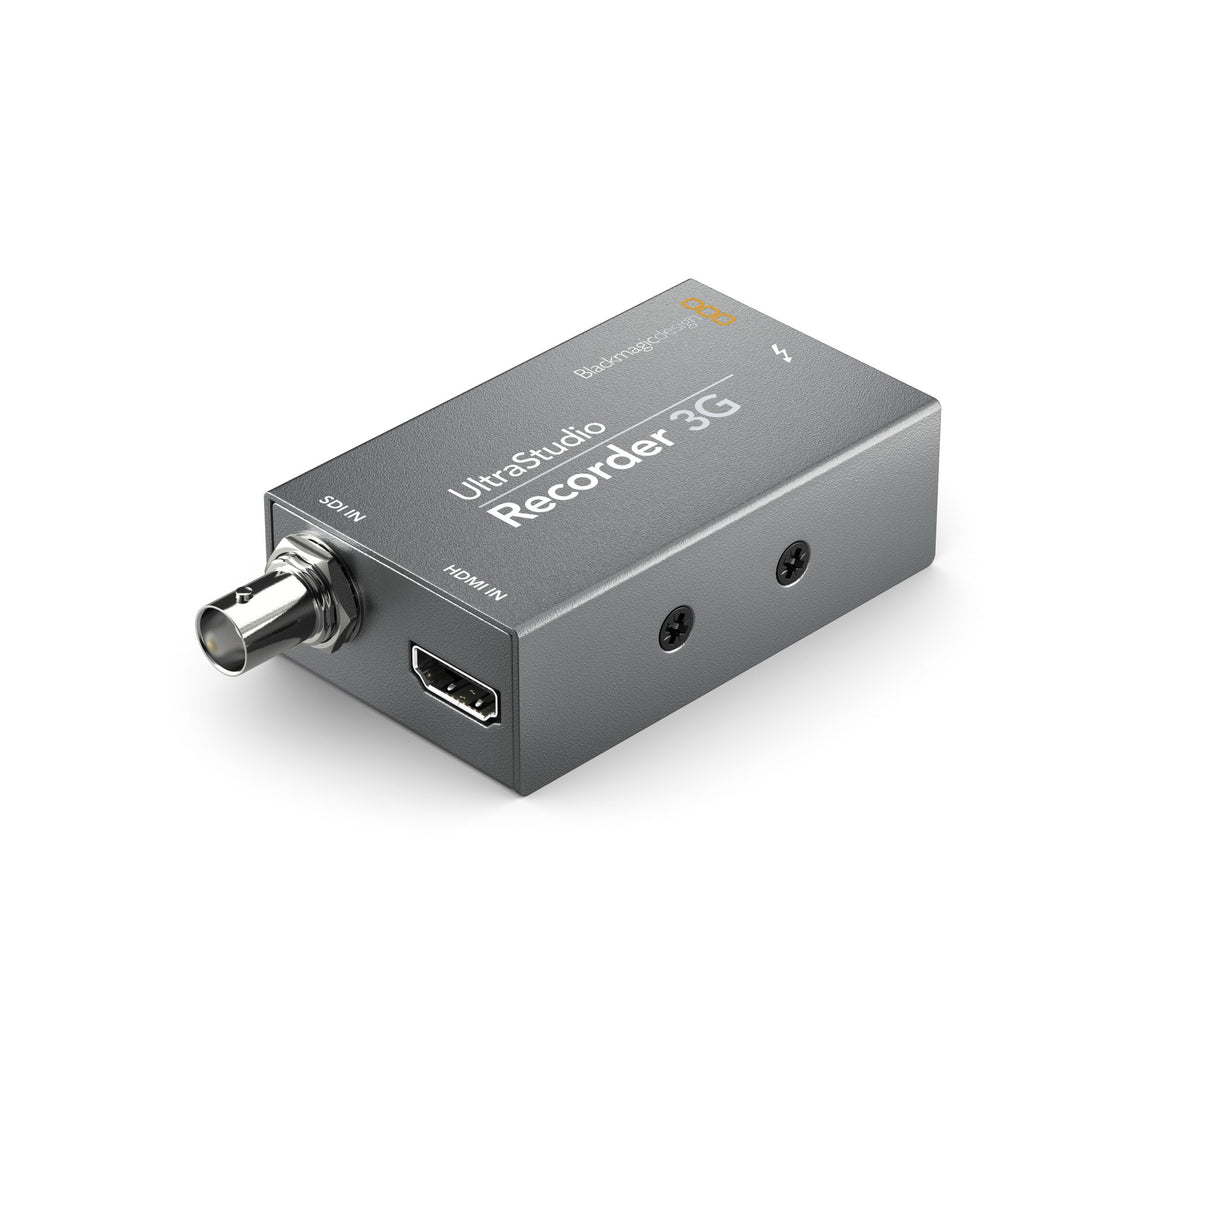 Blackmagic Design UltraStudio Recorder 3G Capture Device